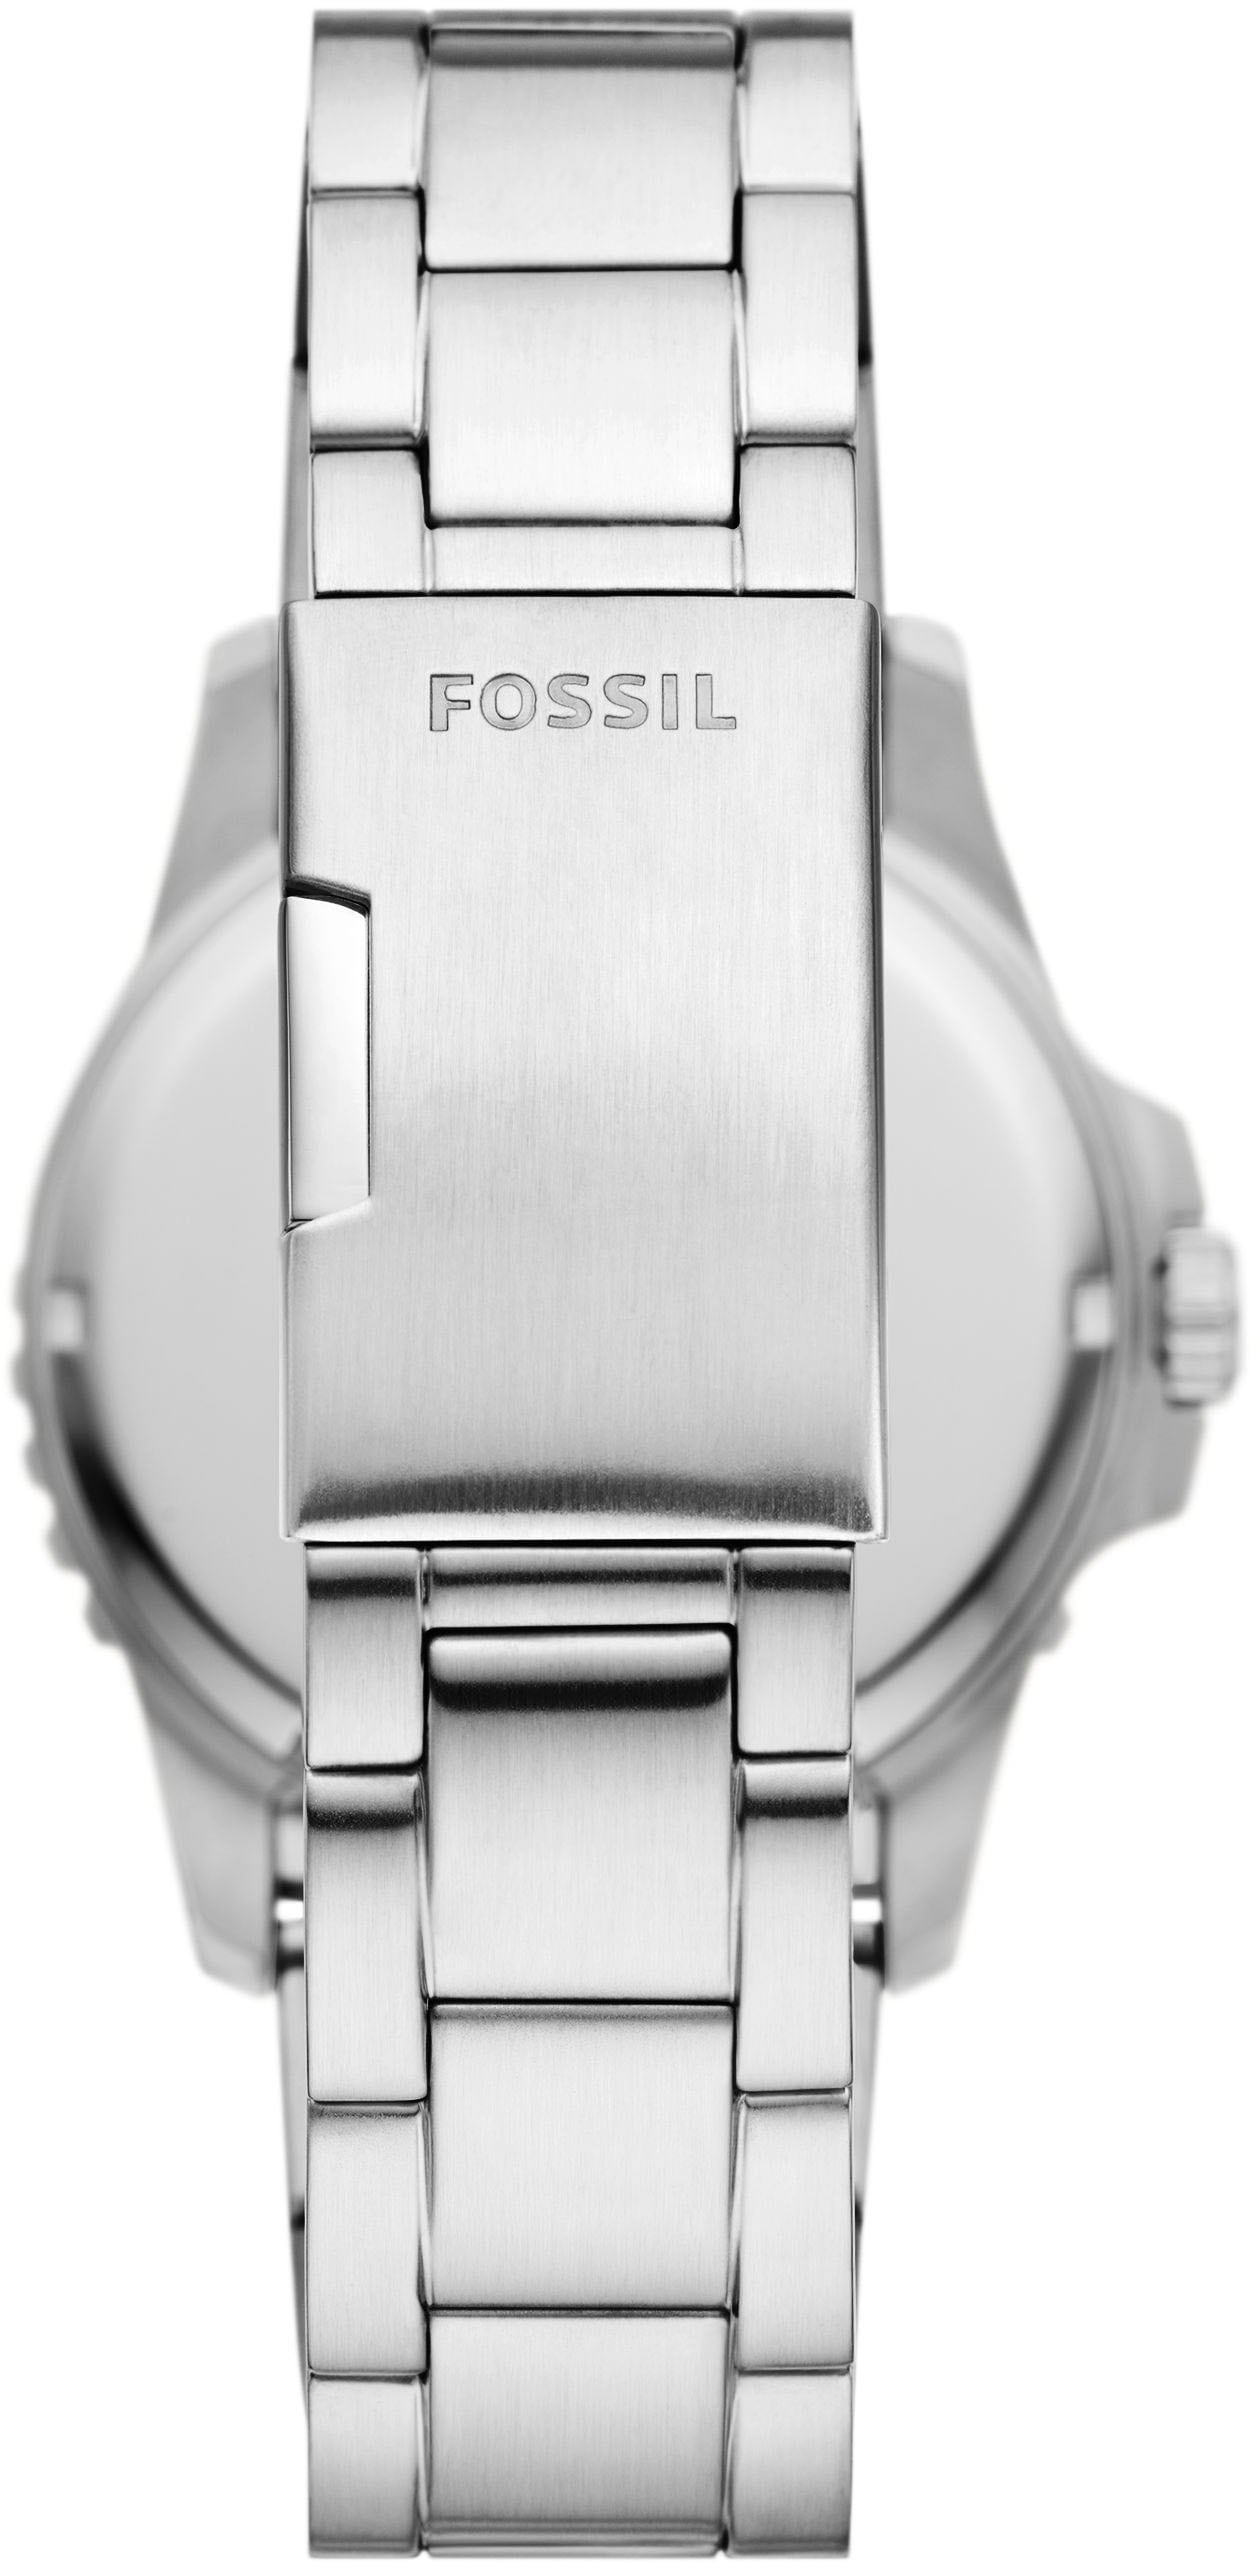 Fossil Quarzuhr »FOSSIL BLUE DIVE, FS6038« online kaufen | I\'m walking